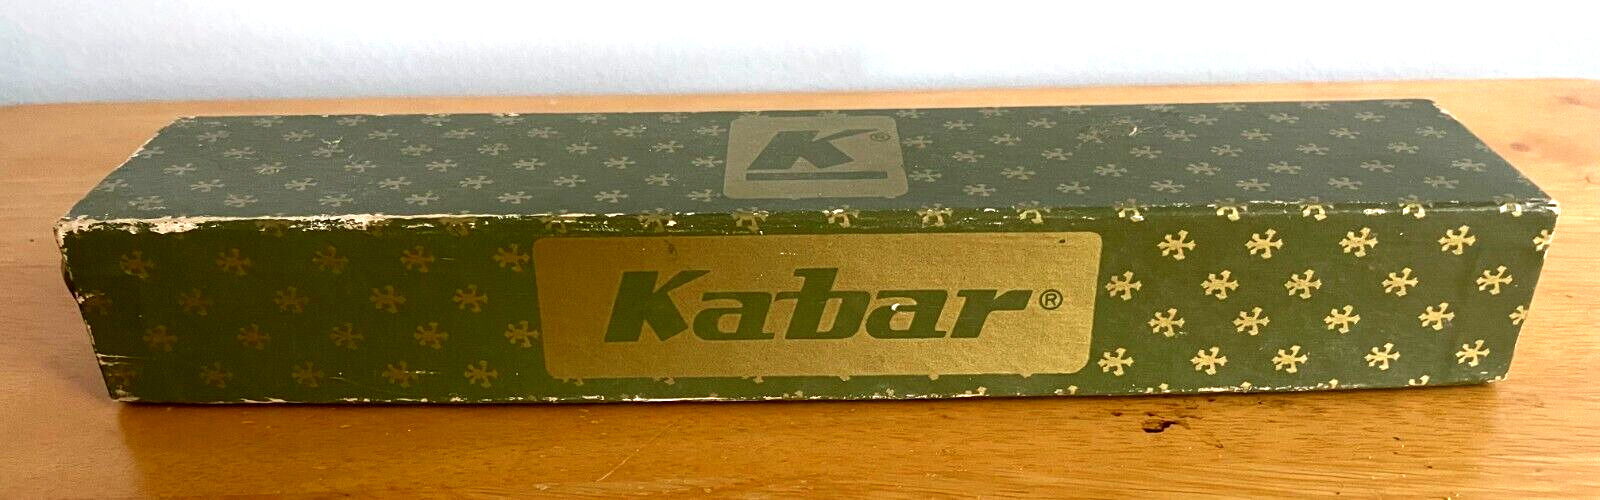 Kabar Box Only for Depression Glass Fruit Cake Knife